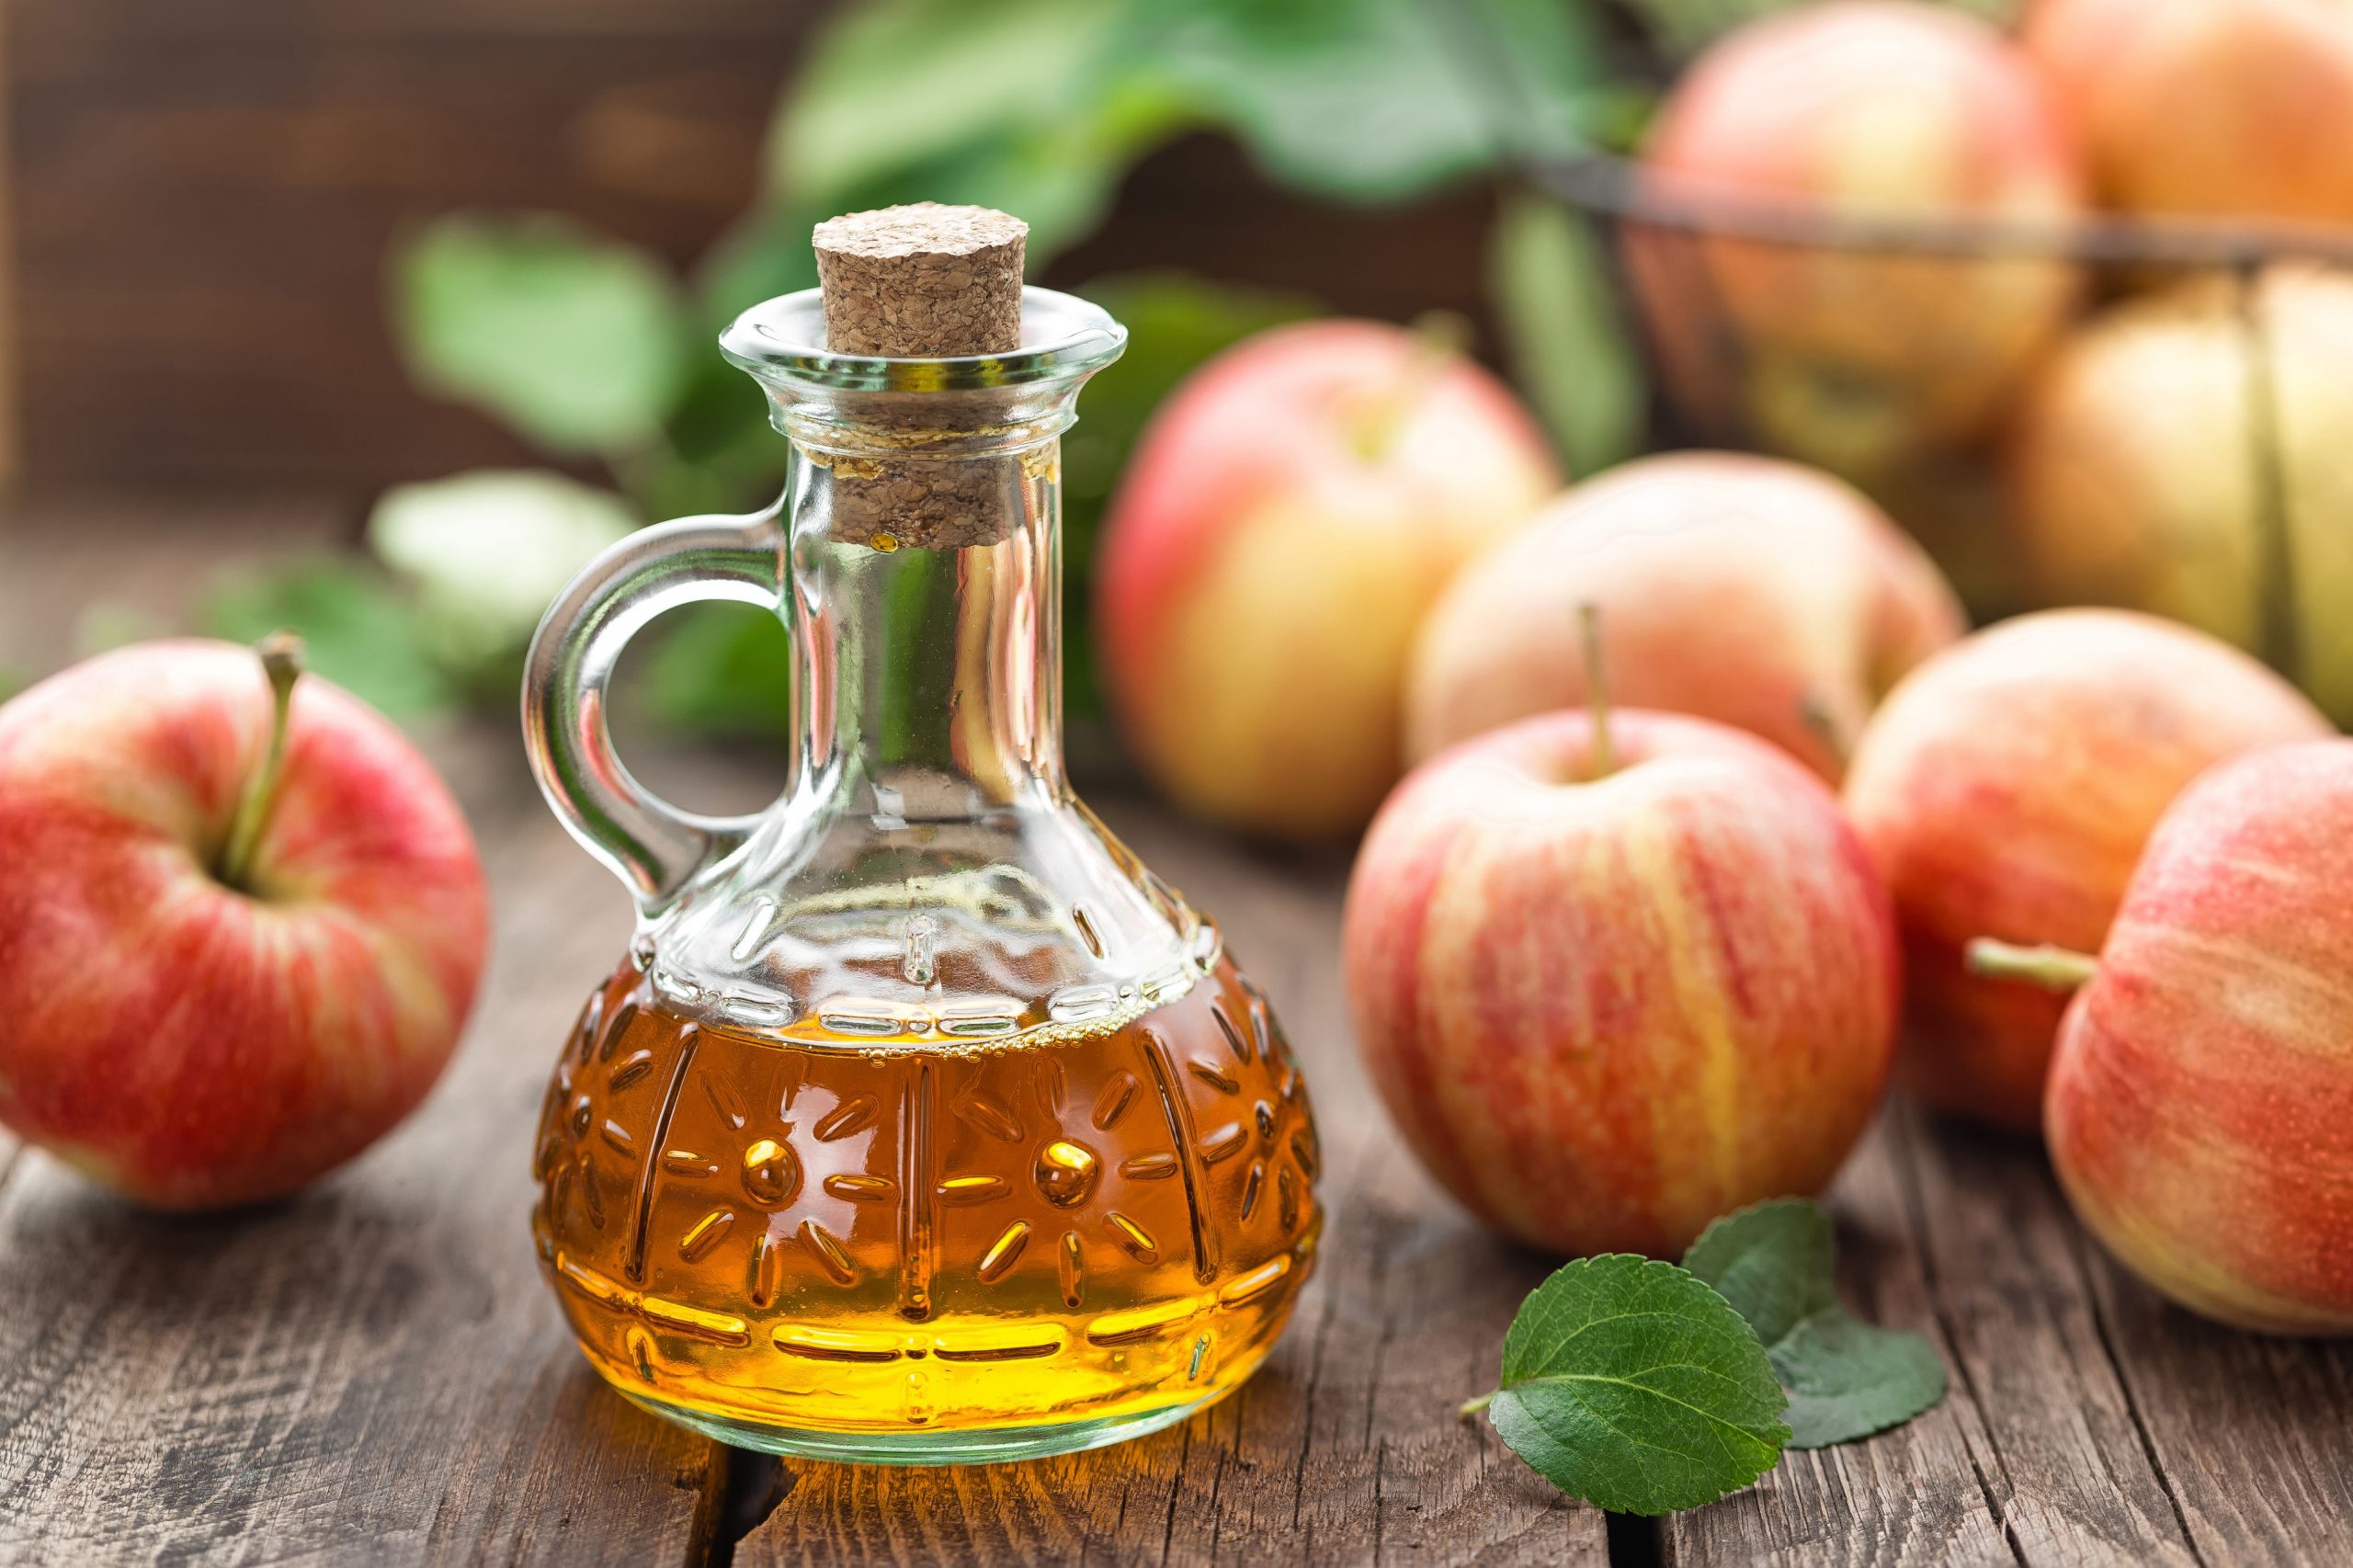 apple-cider-vinegar-royalty-free-image-614444404-1533158045-scaled.jpg